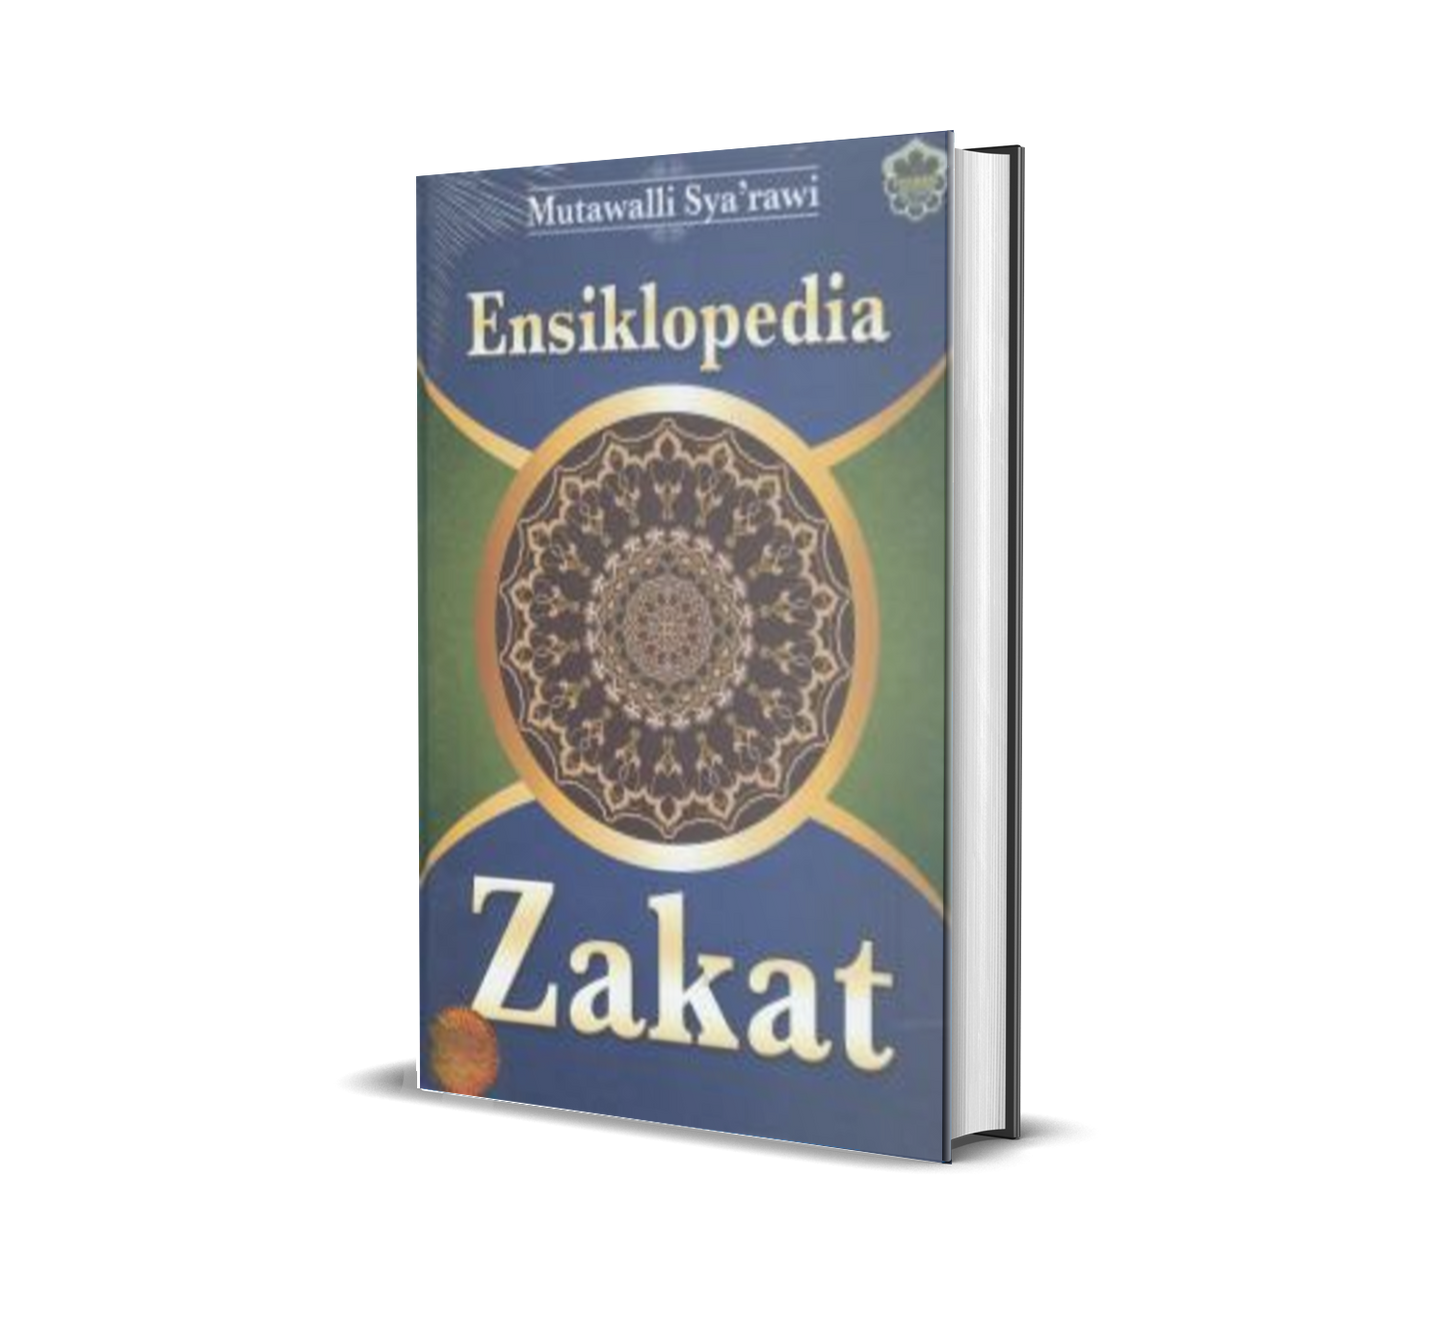 Ensiklopedia Zakat